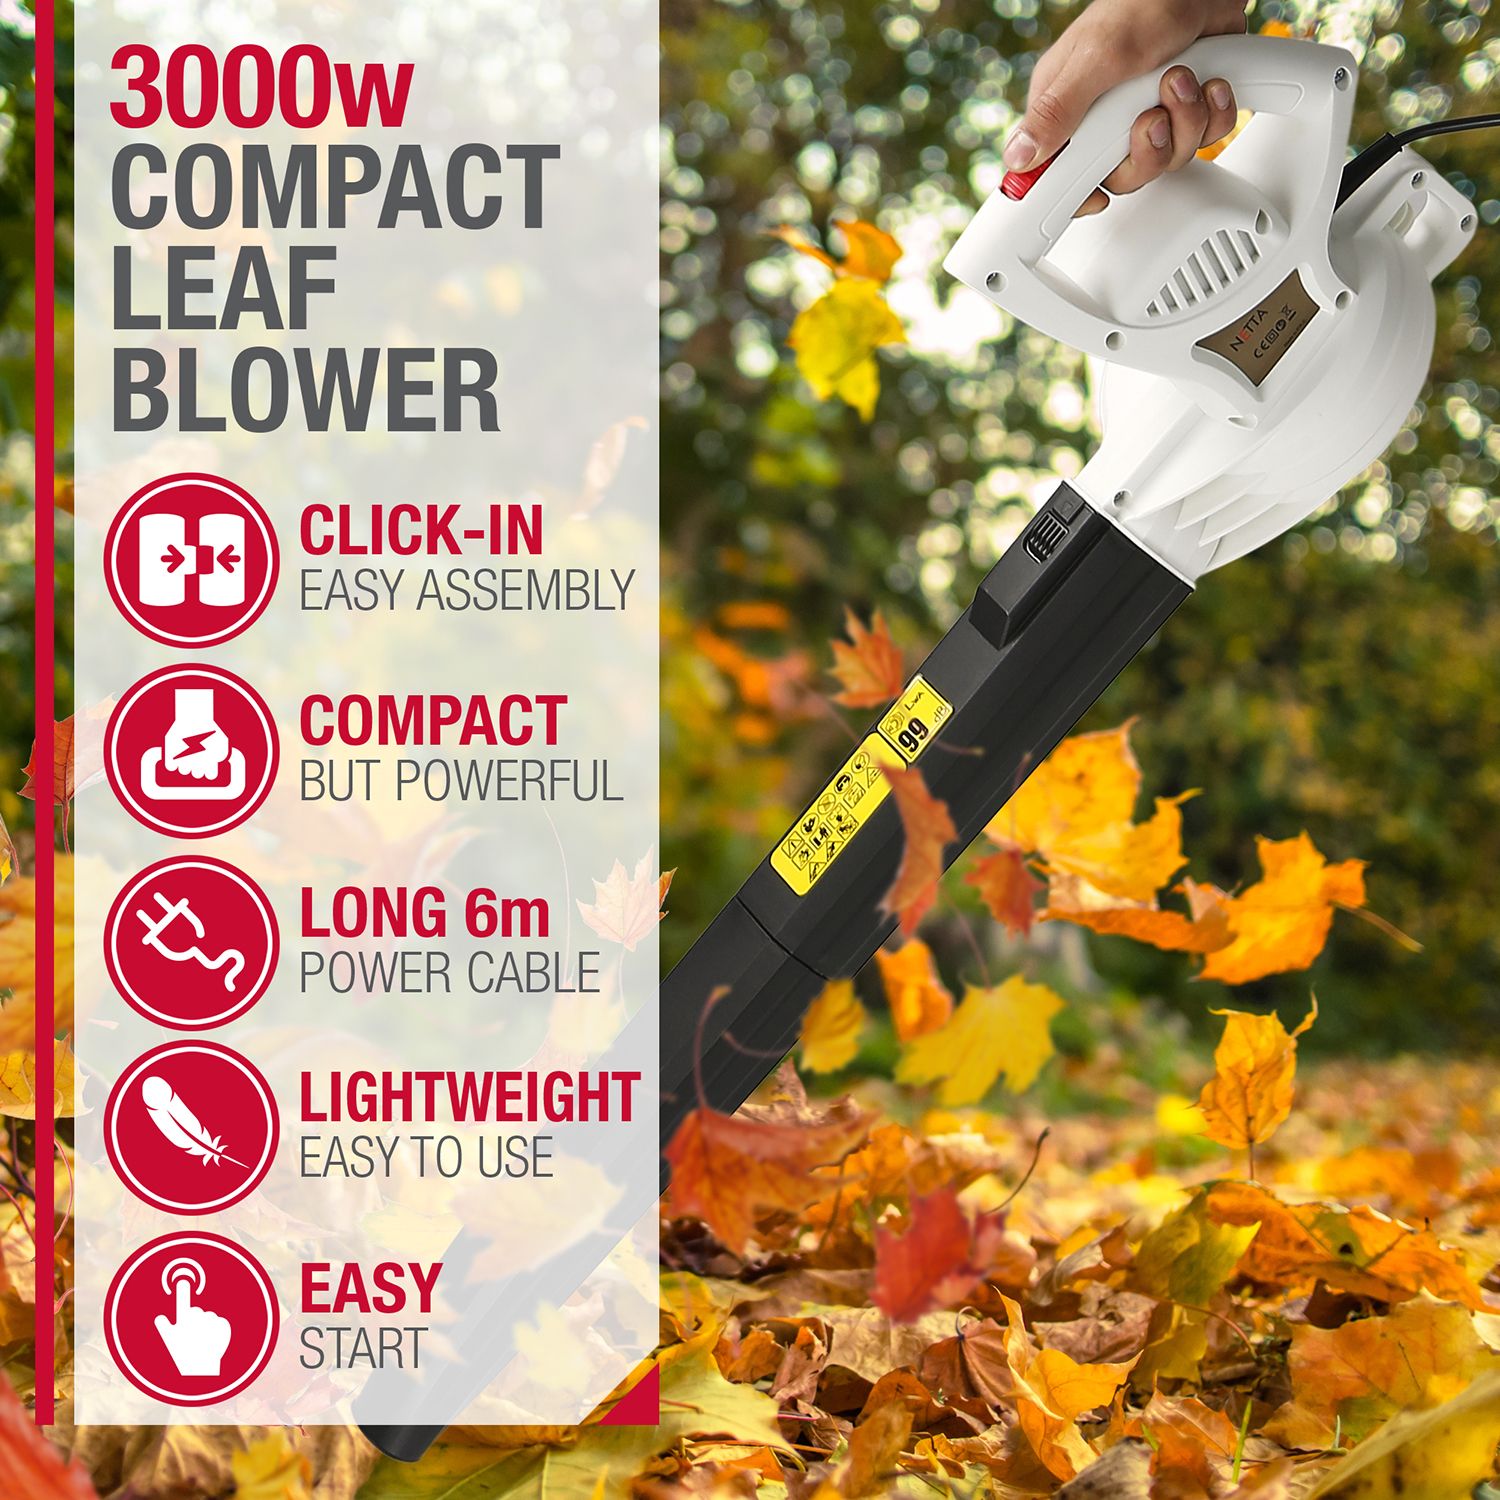 NETTA Lightweight Leaf Blower - 3000W